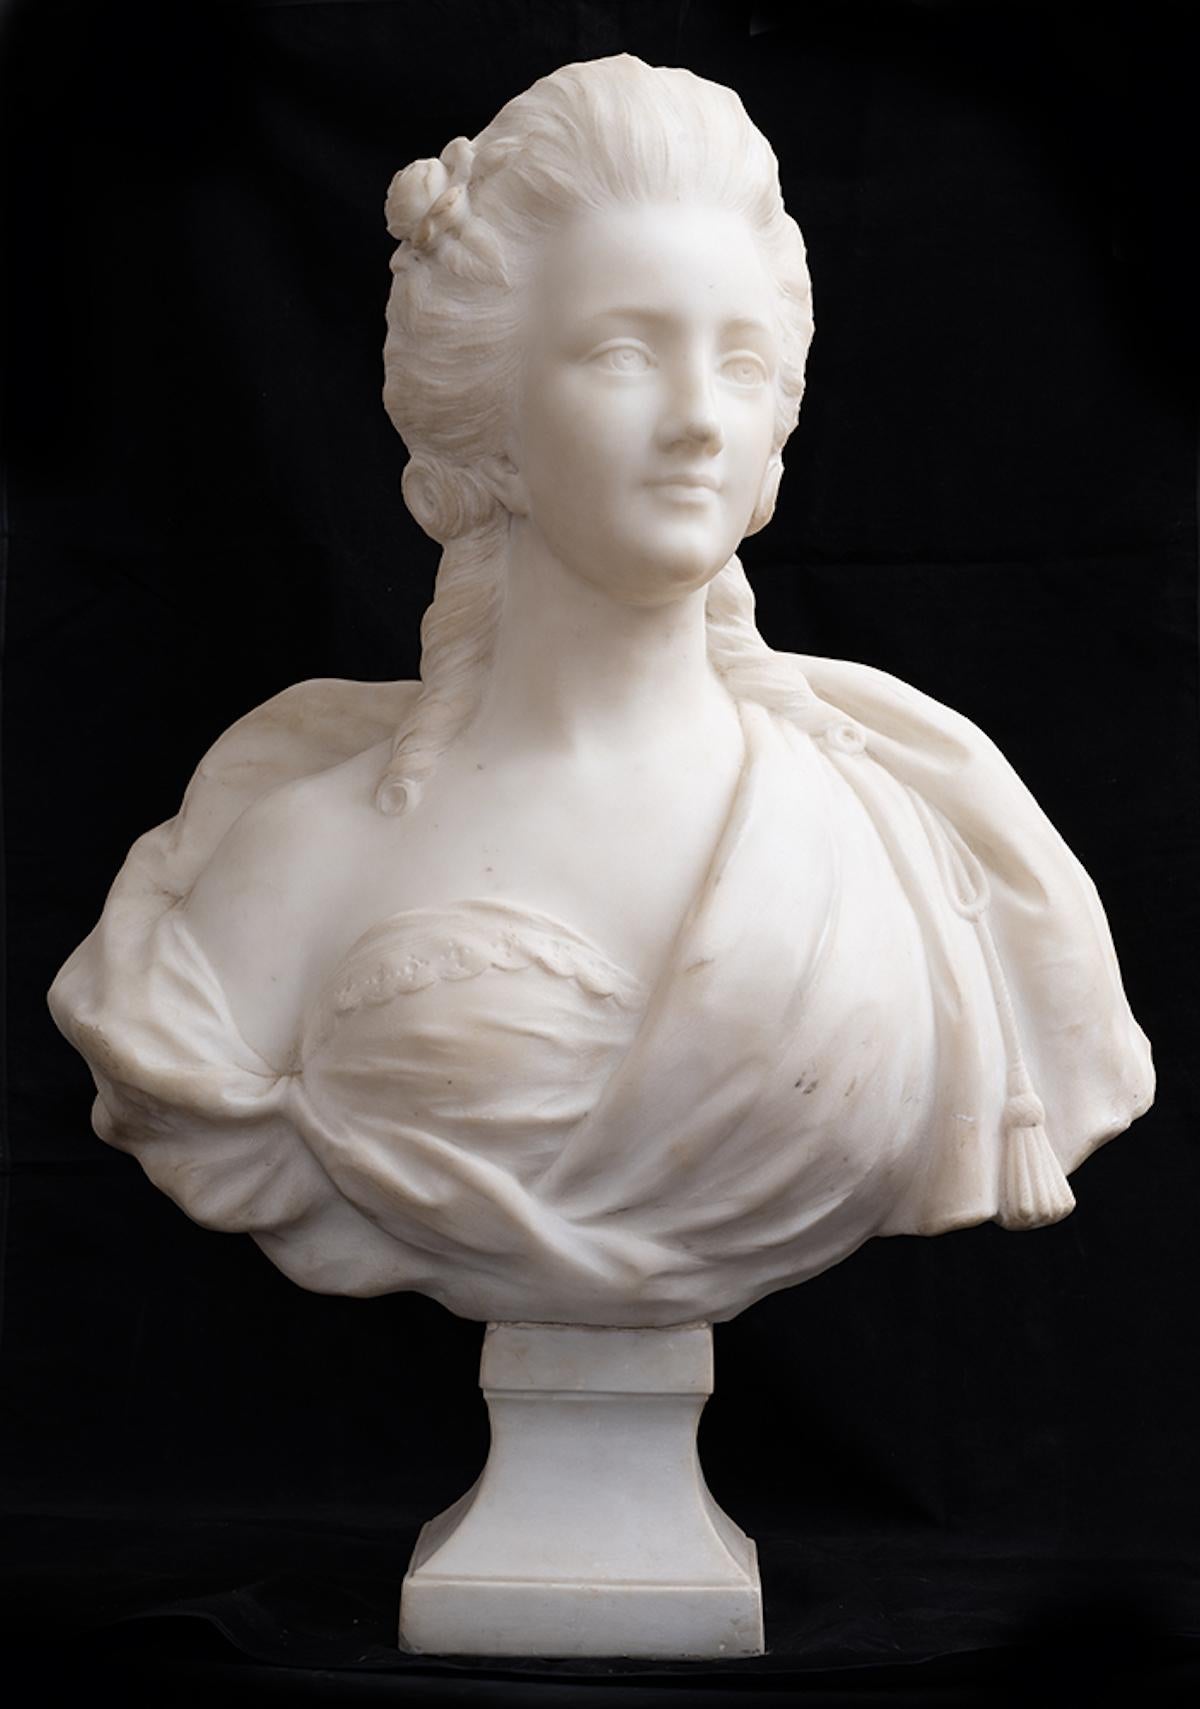 Unknown Figurative Sculpture - Antique white marble statuary sculpture depicting Marie Antoinette.